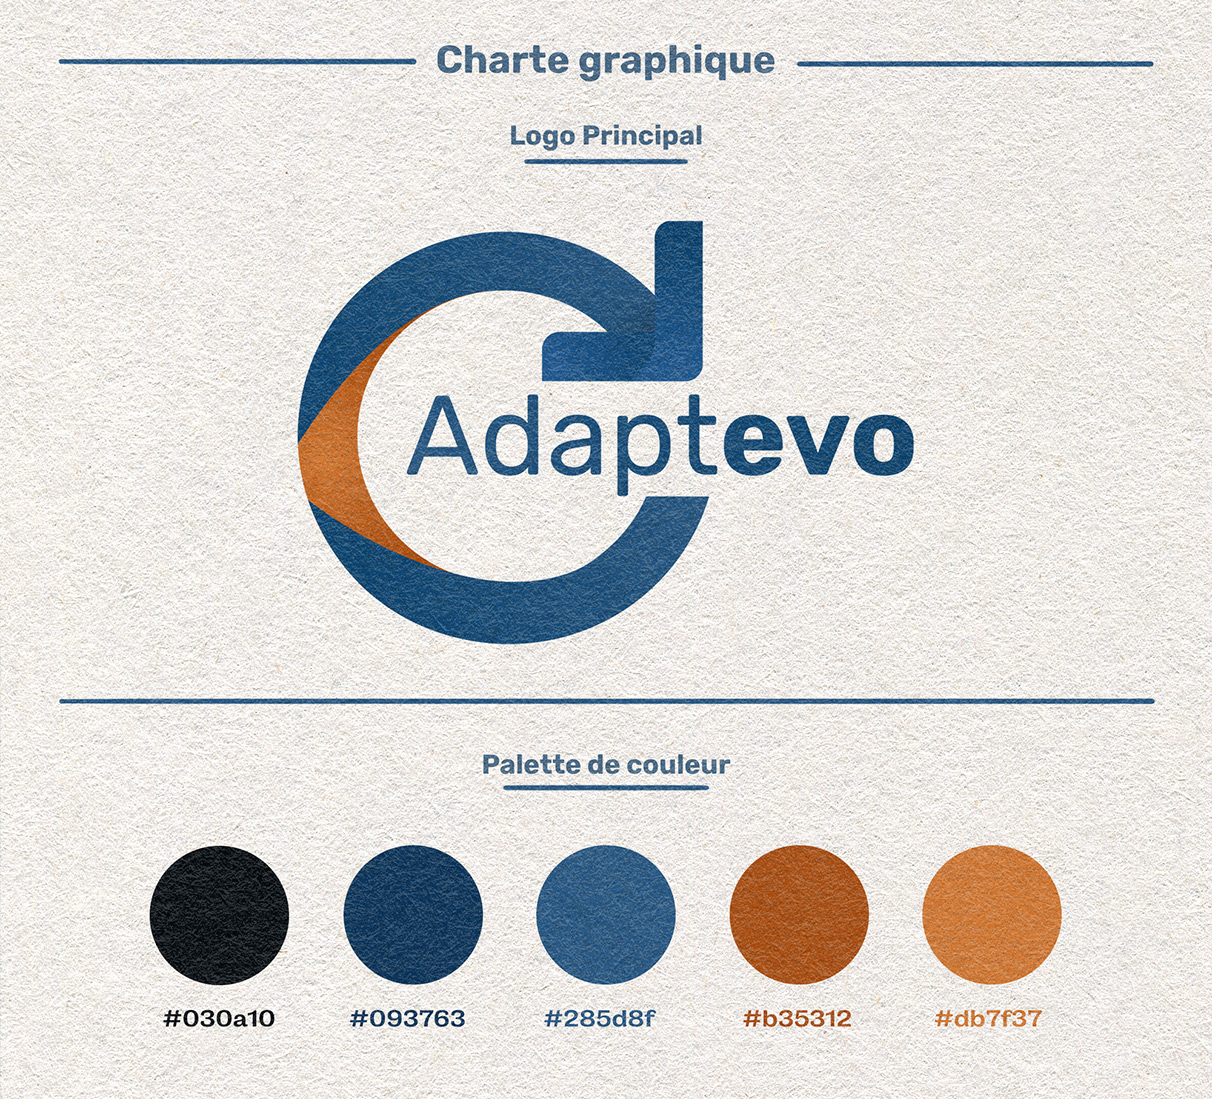 charte-graphique-adaptevo-vay-studio